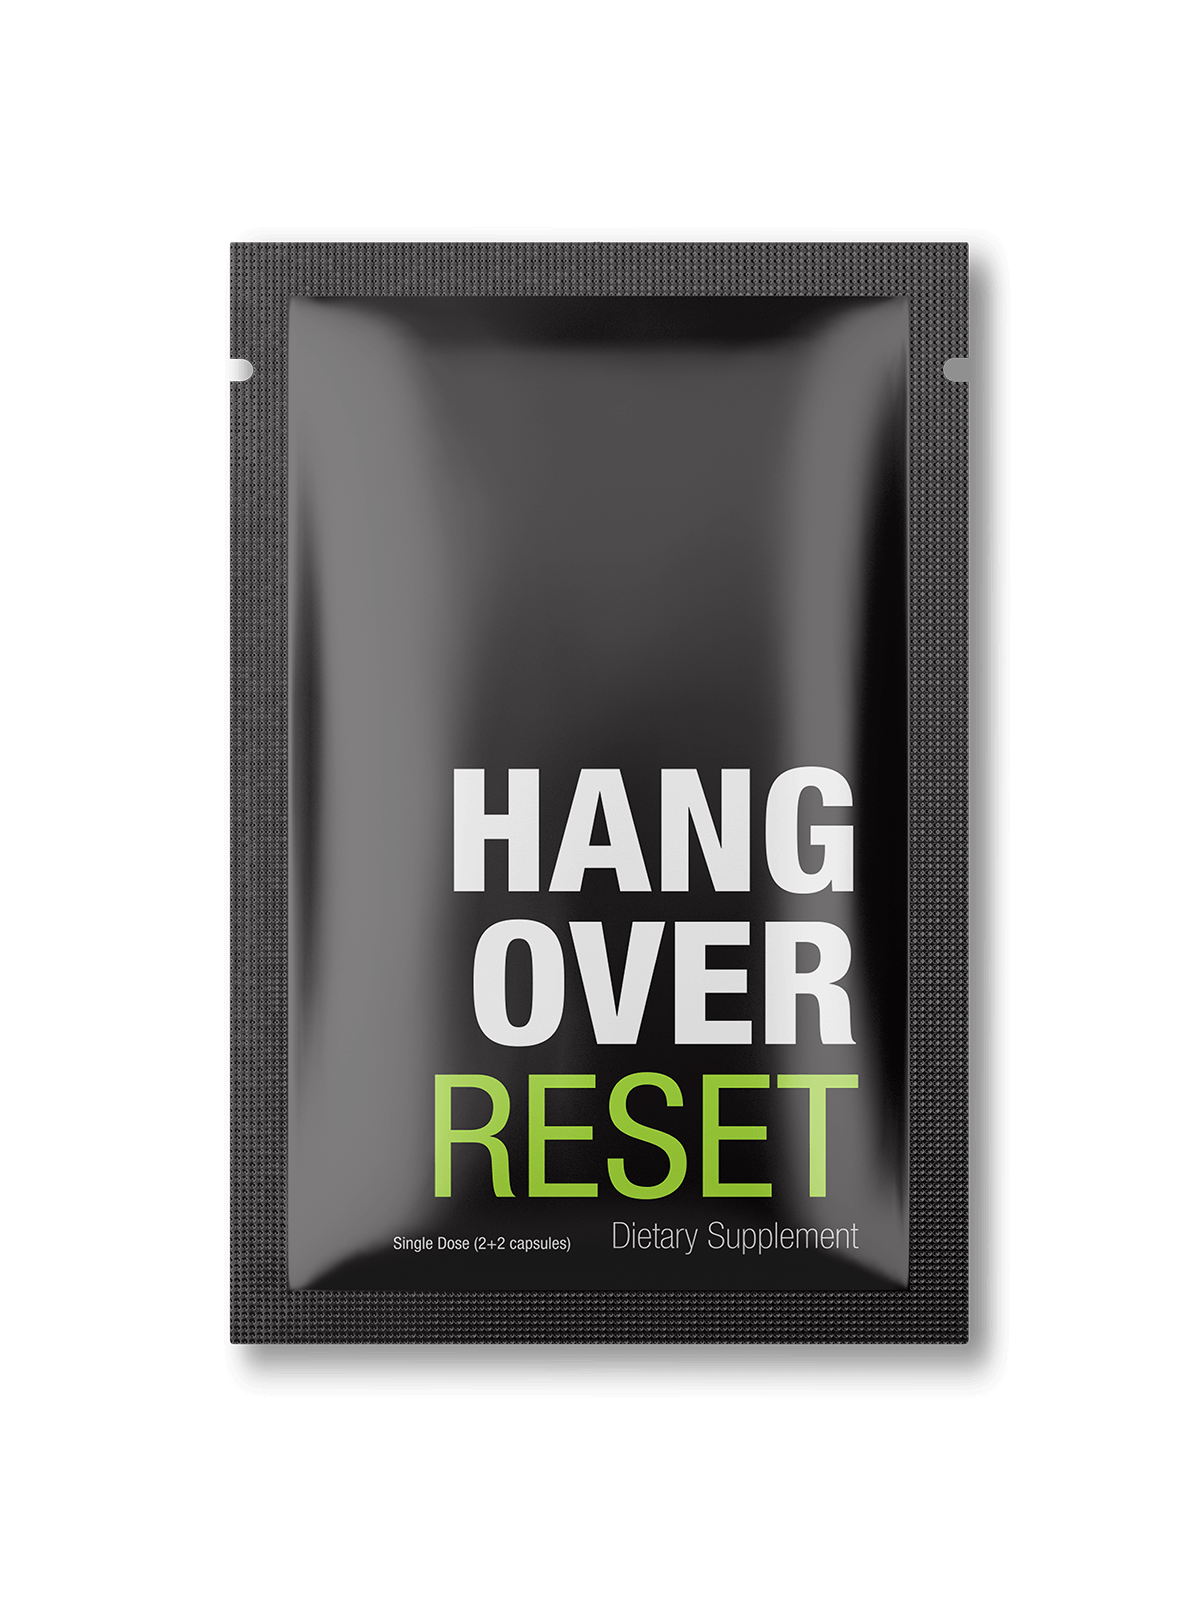 Hangover Reset